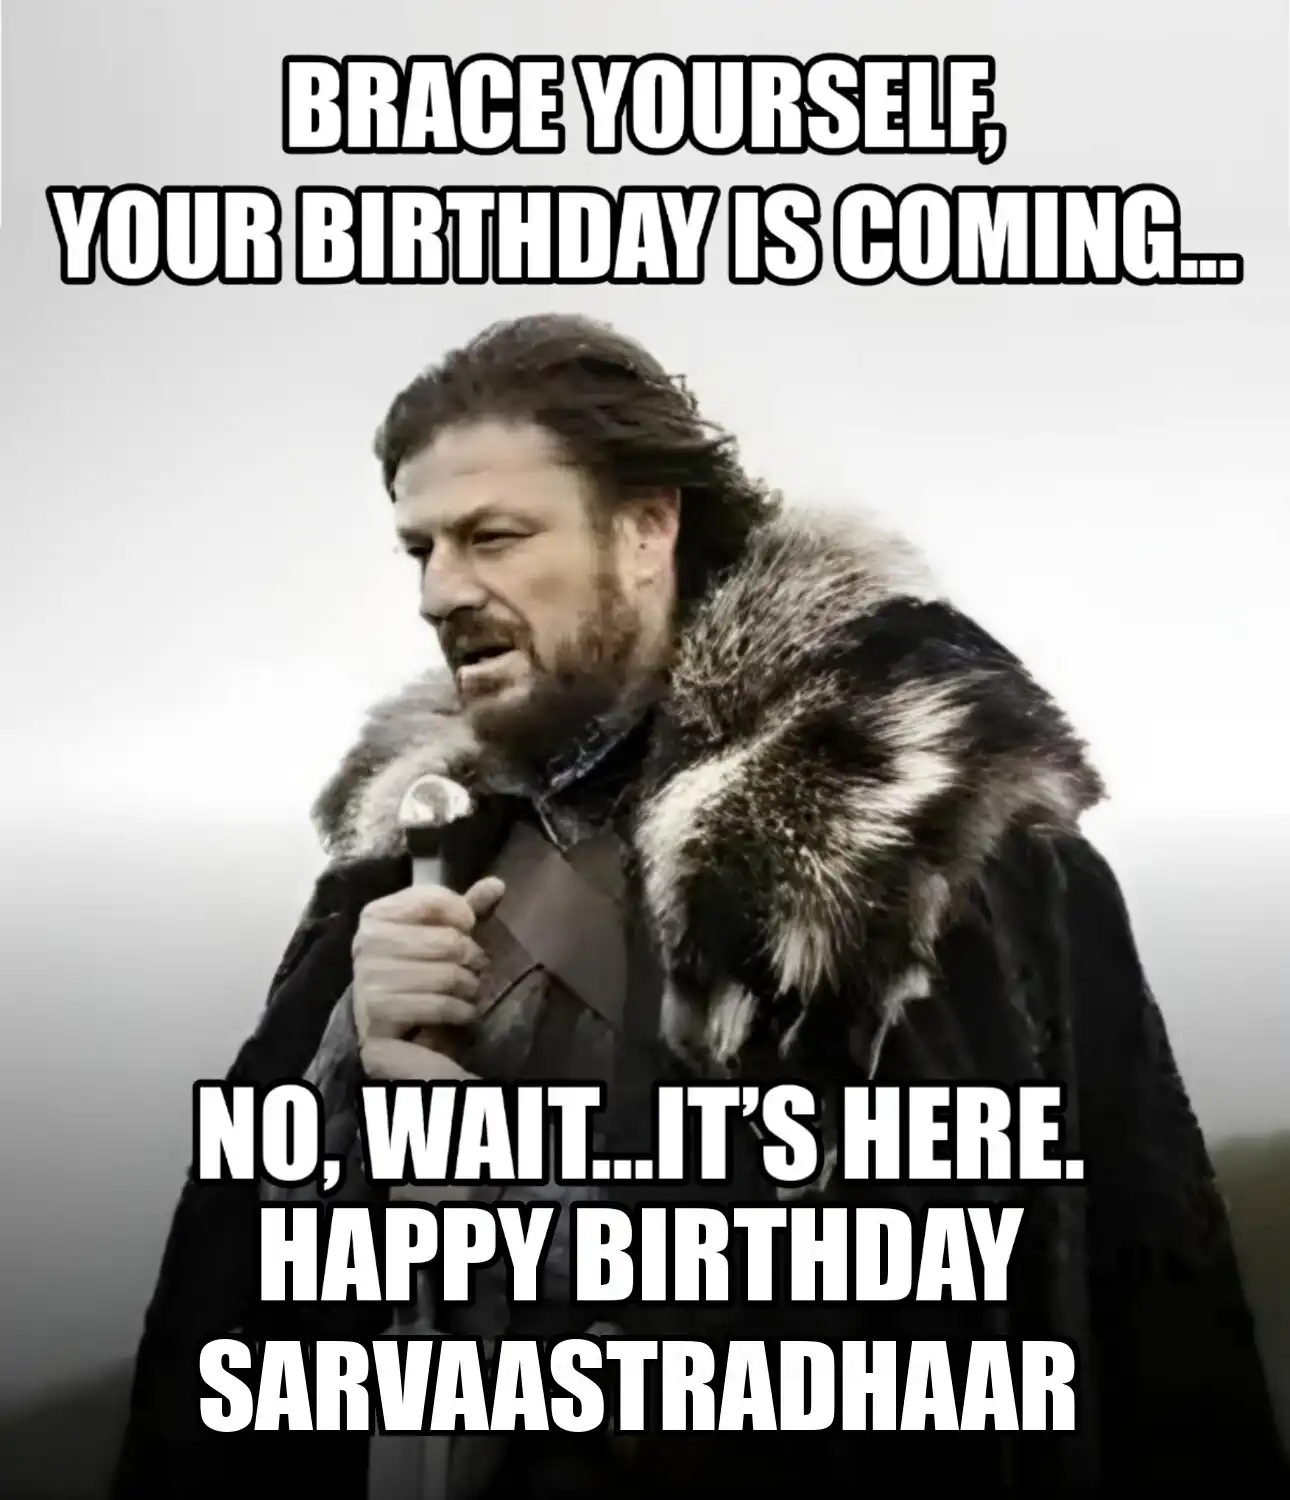 Happy Birthday Sarvaastradhaar Brace Yourself Your Birthday Is Coming Meme